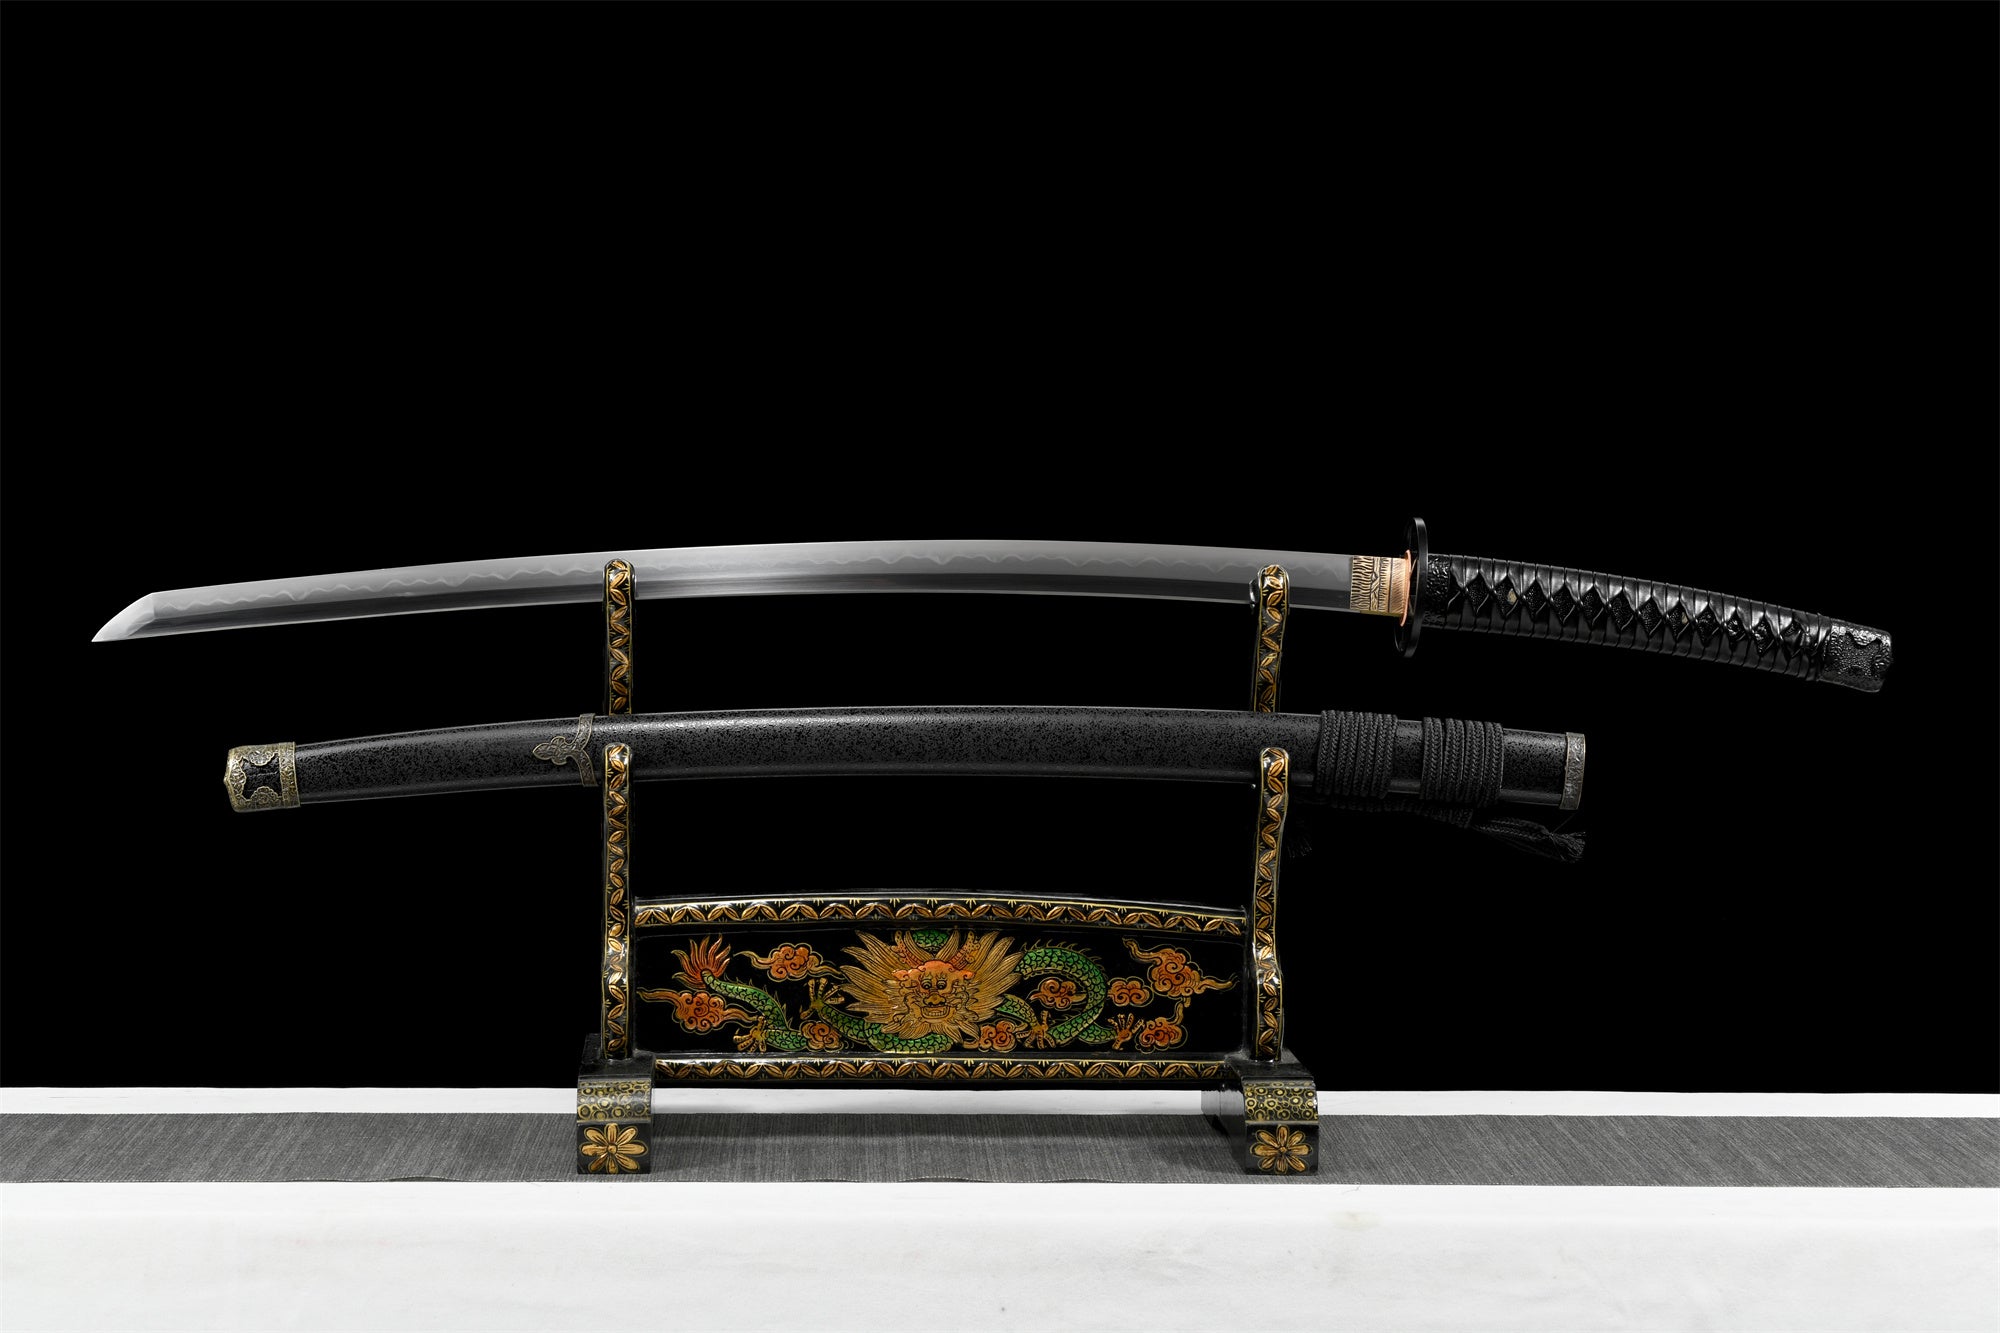 Rurouni Kenshin Katana Sword,Japanese Samurai Sword,Real Handmade Katana,Clay tempered t-10 steel with hamon